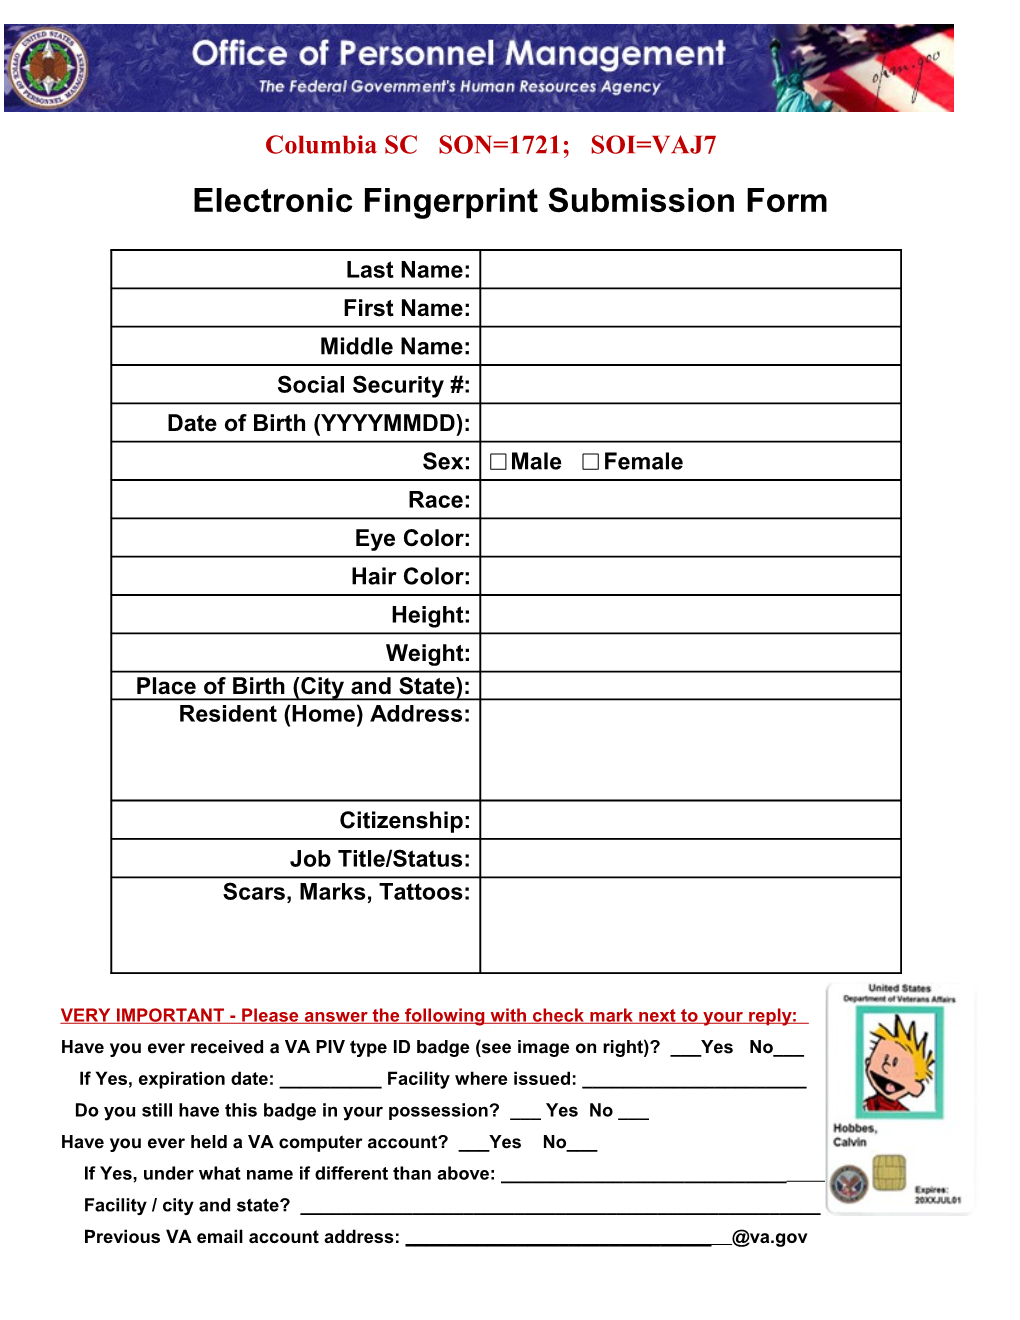 Electronic Fingerprint Submission Form